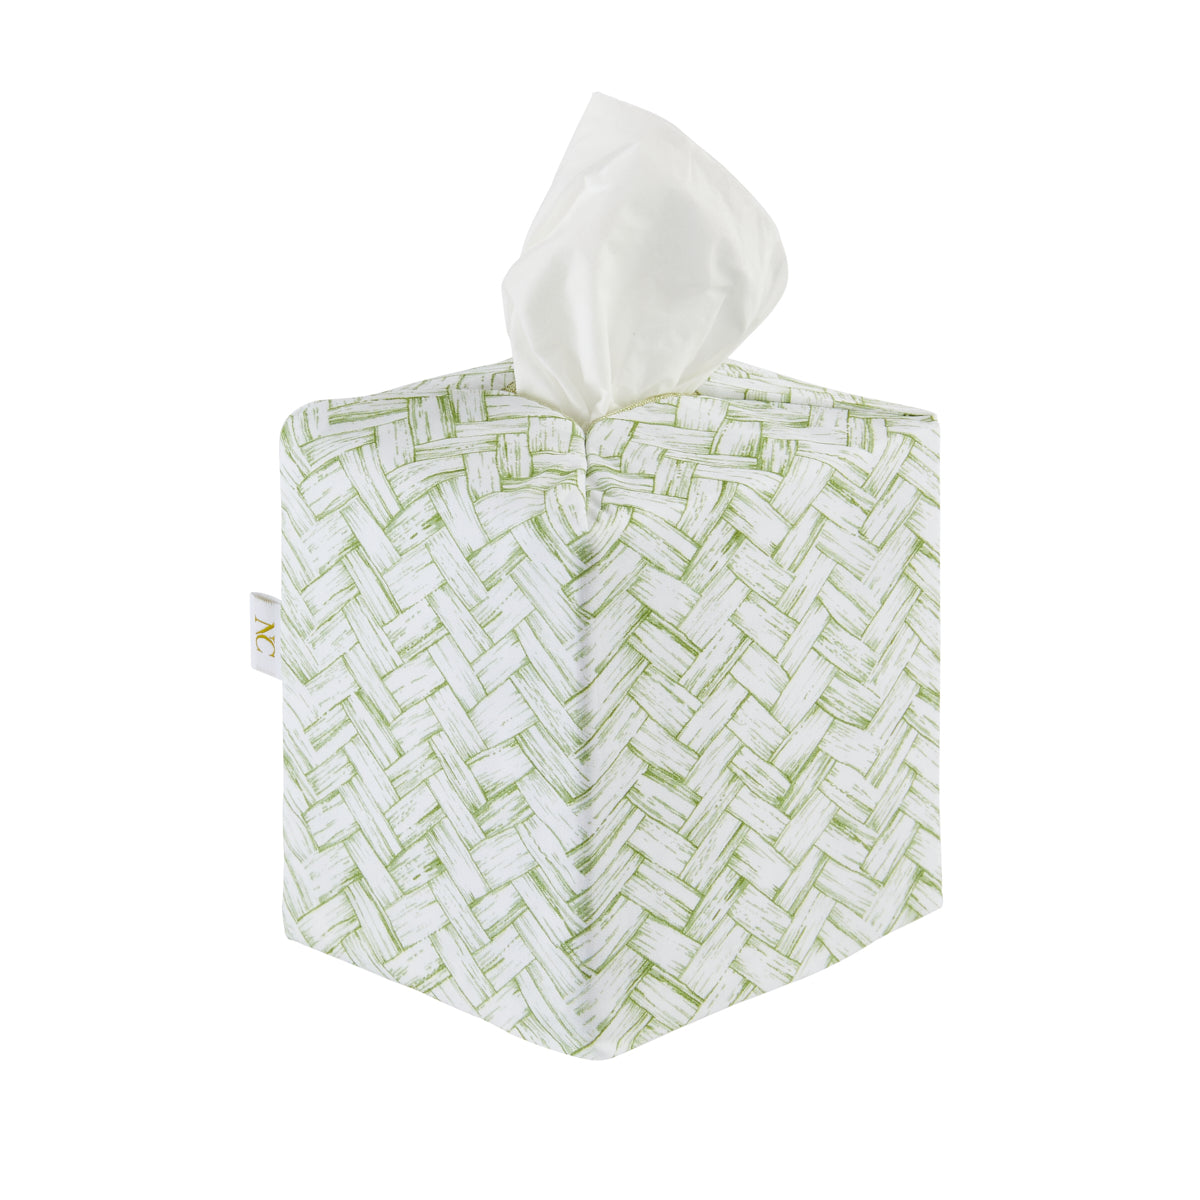 Tissue Box Cover - Basketweave Green